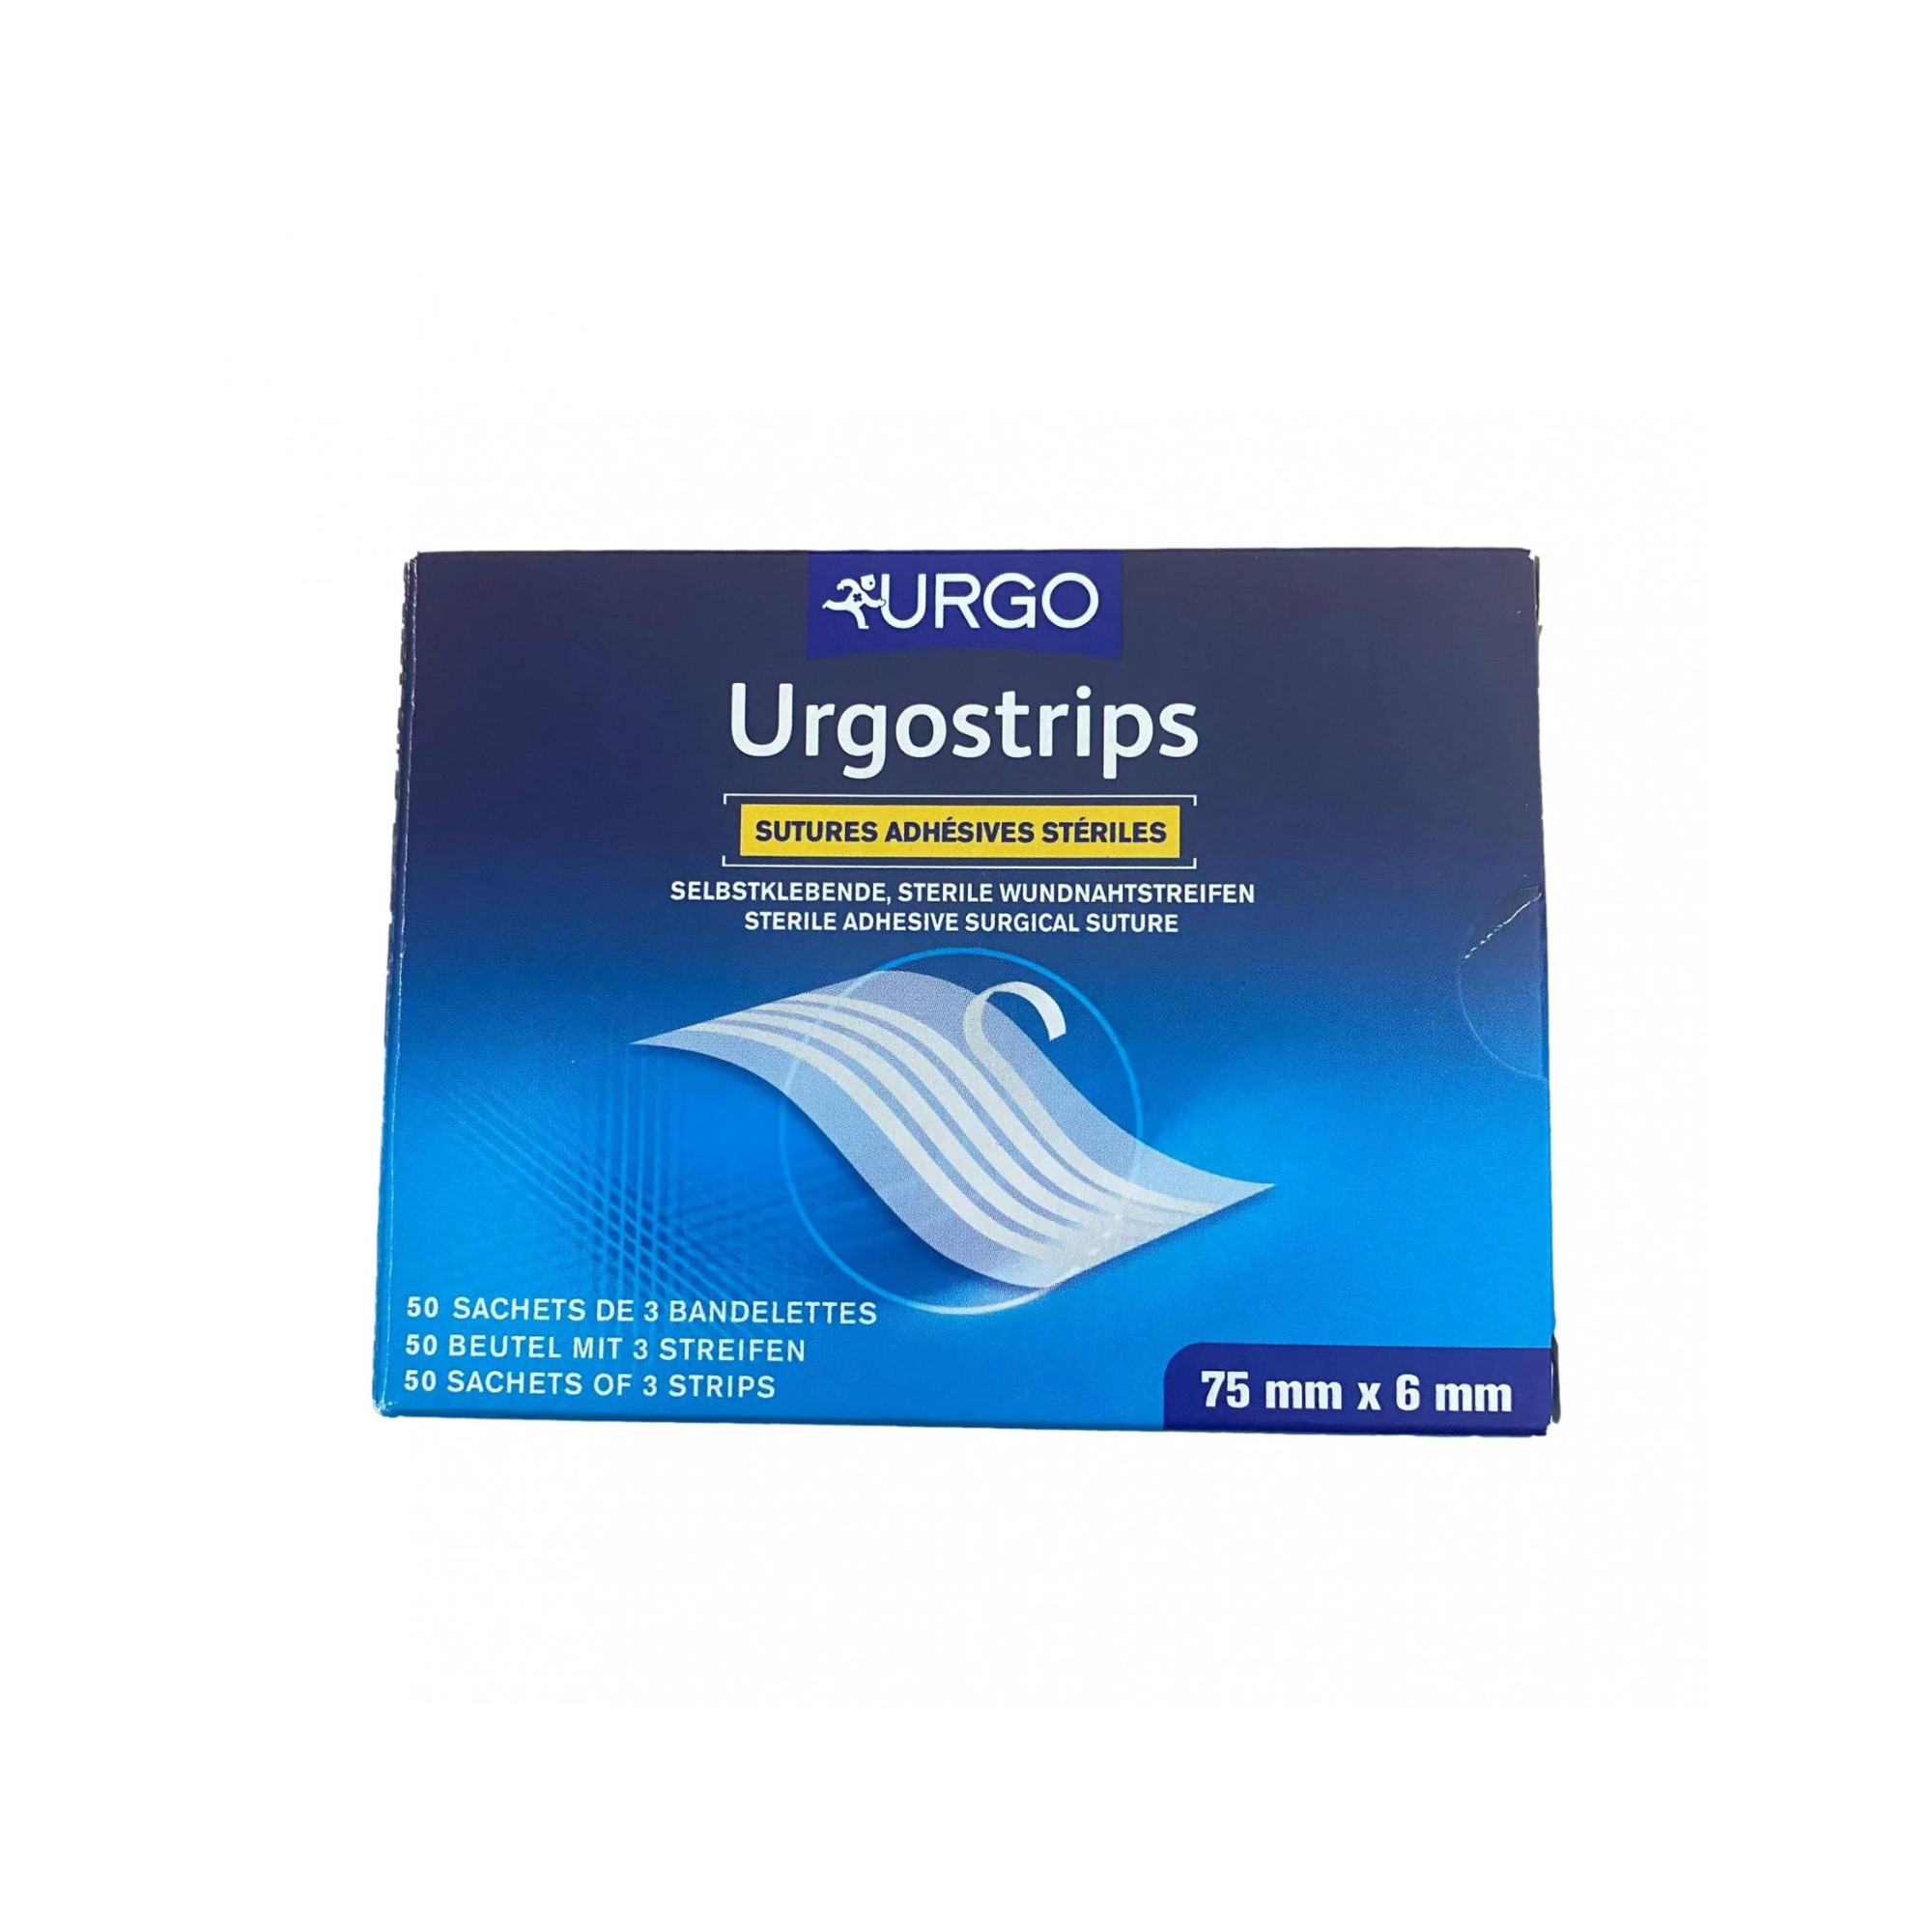 Boite de 50 sachets de sutures chirurgicales adhésives stériles - UrgoStrips - Urgo